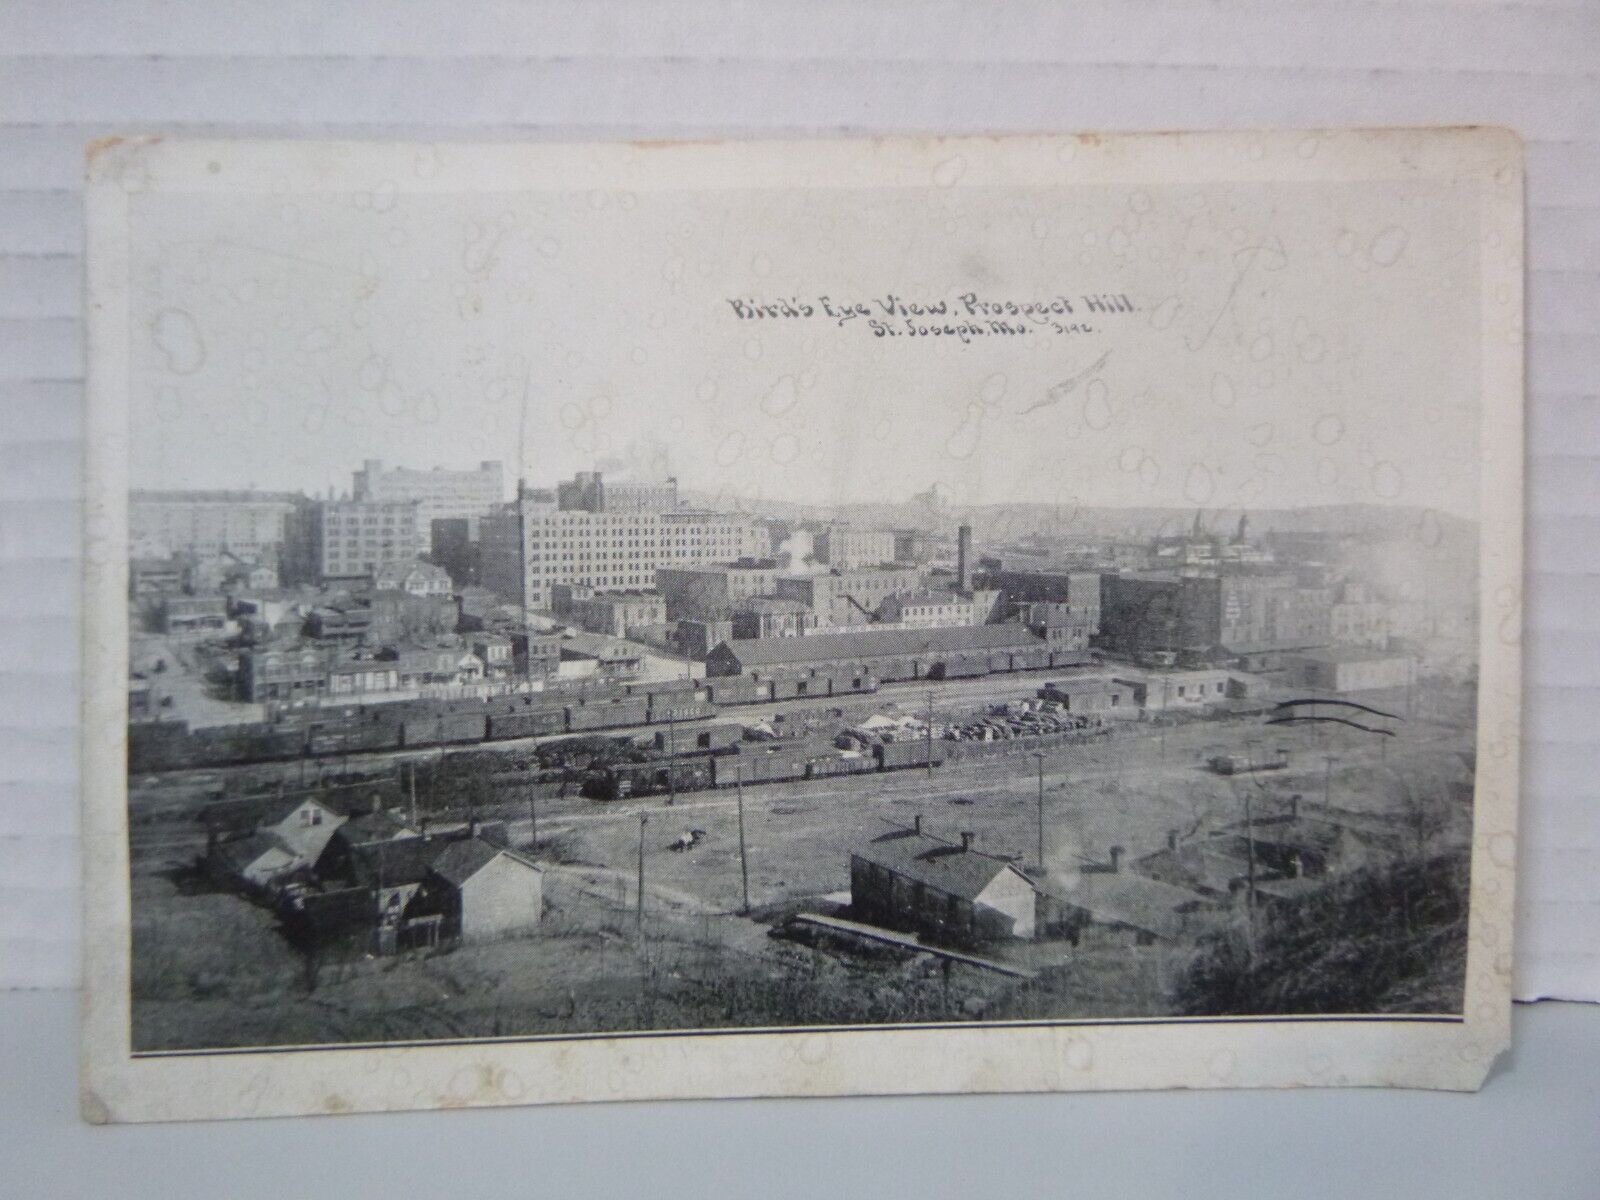 c1910 Souvenir View Card - Bird's Eye View, Prospect Hill, St Joseph, Missouri